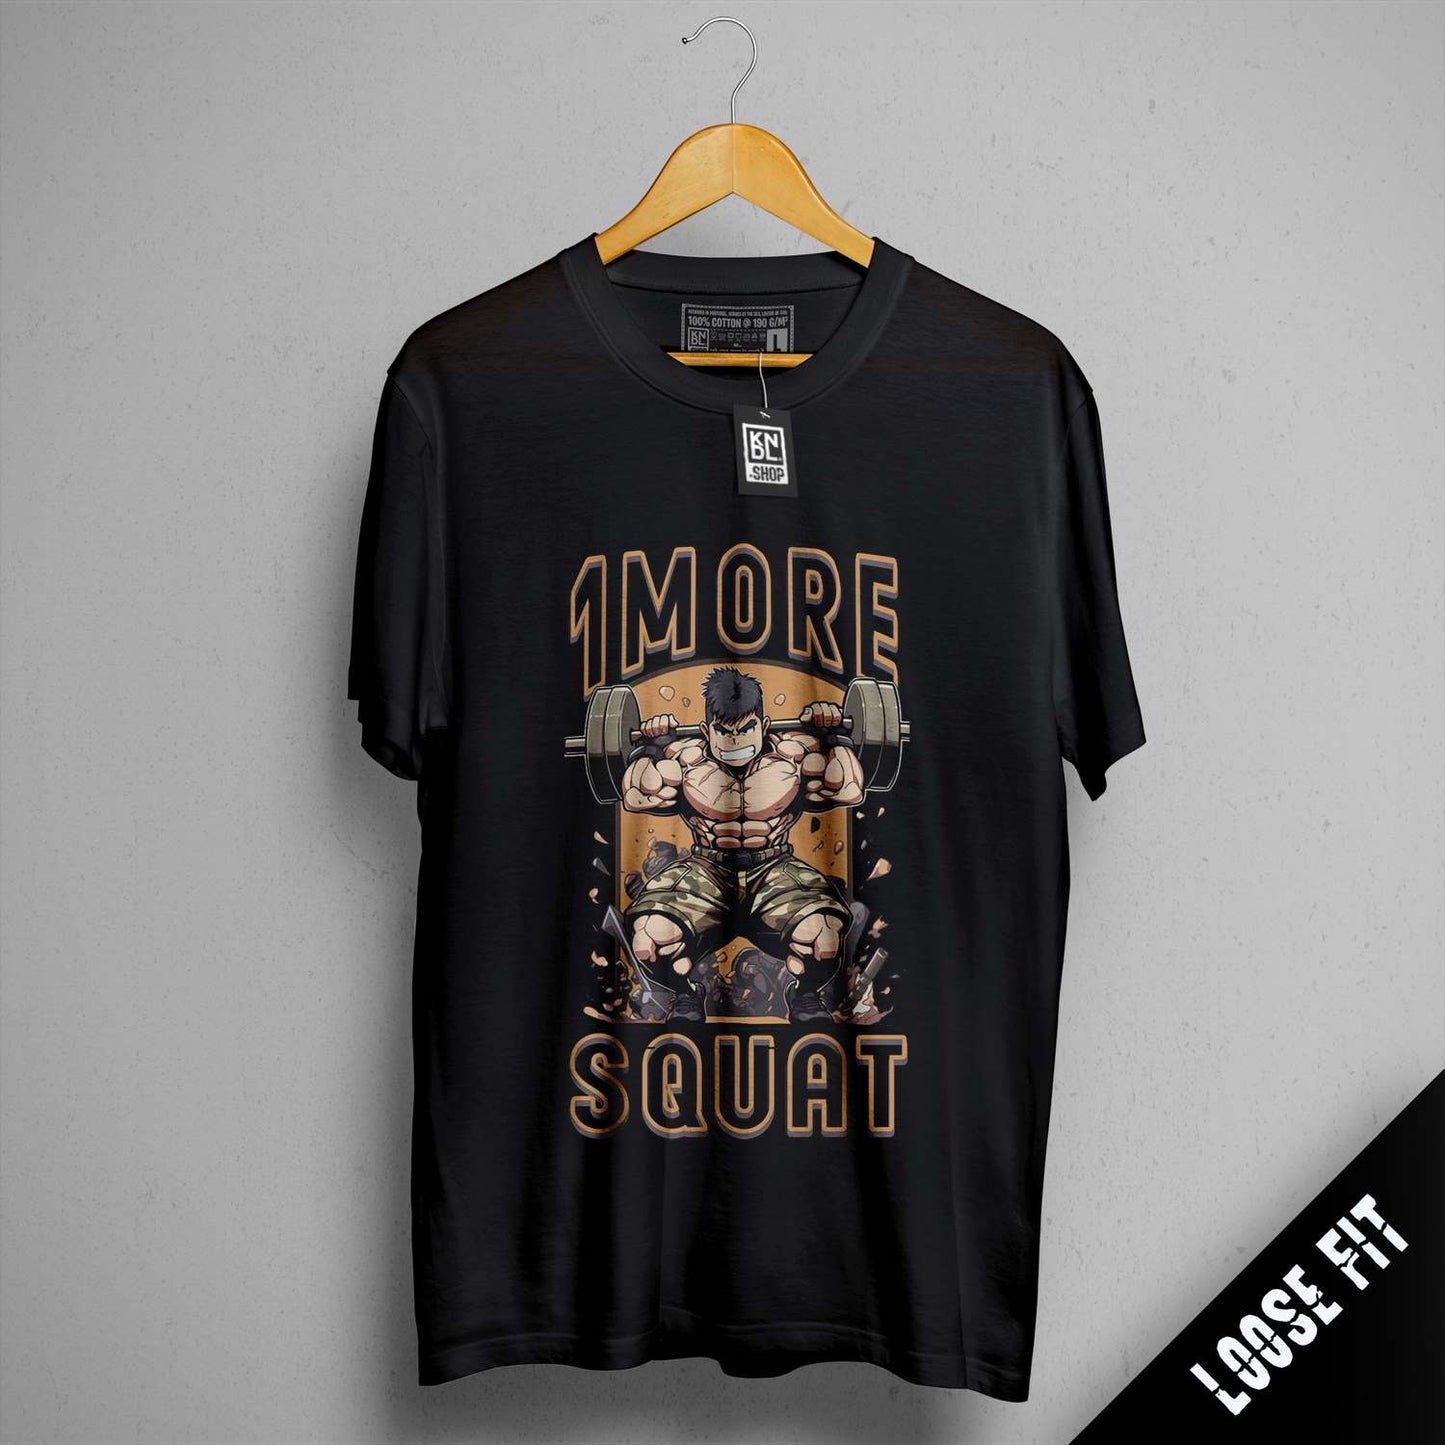 a t - shirt that says i'm more squat than a squat